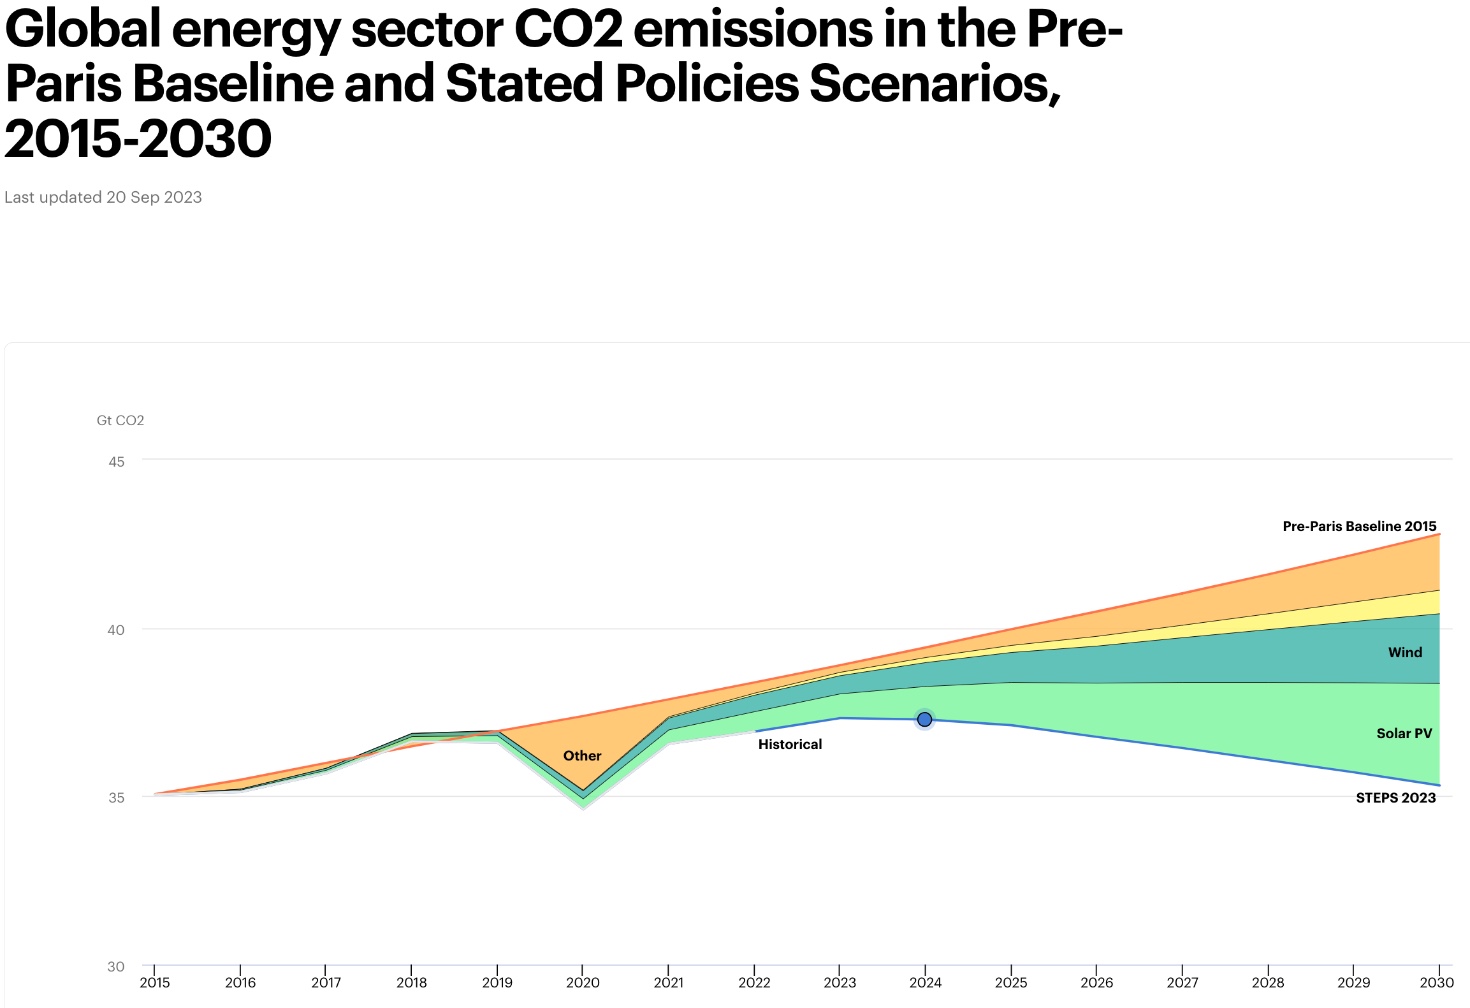 Global energy sector CO2 emissions scenarios. Source: IEA